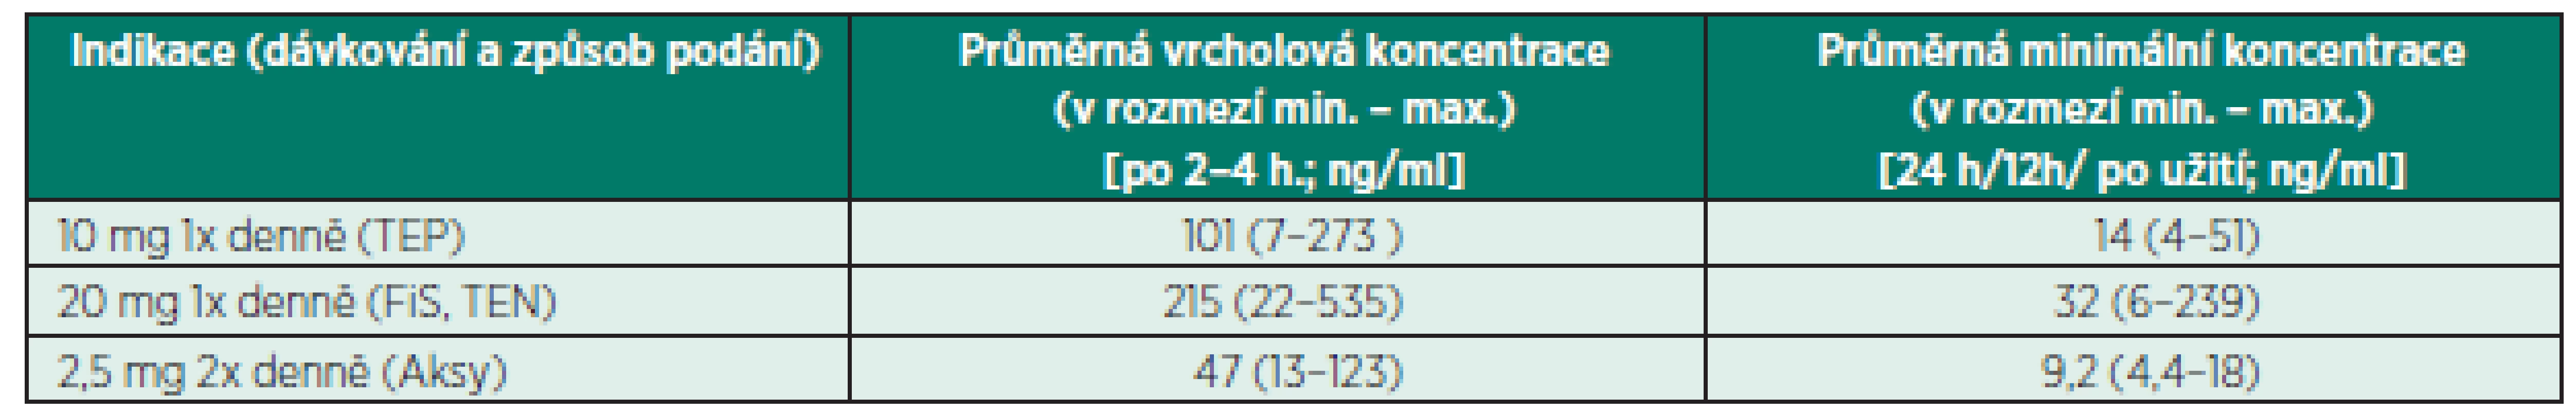 Terapeutické koncentrace rivaroxabanu podle SPC<sup>2</sup>